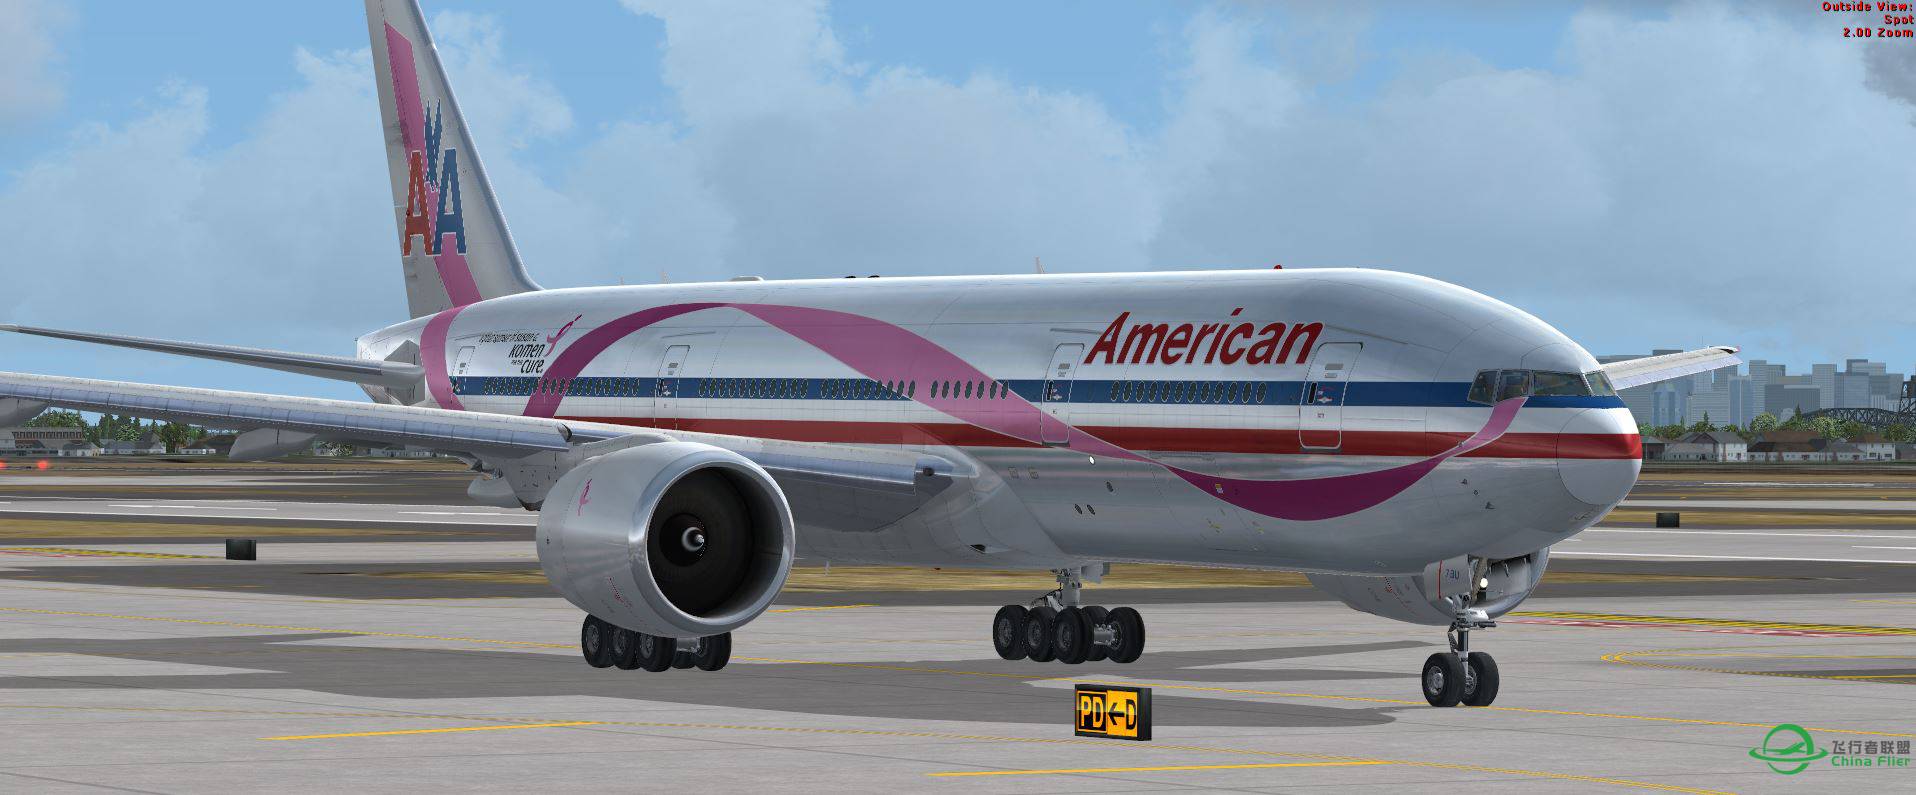 B777 American Airline-8086 